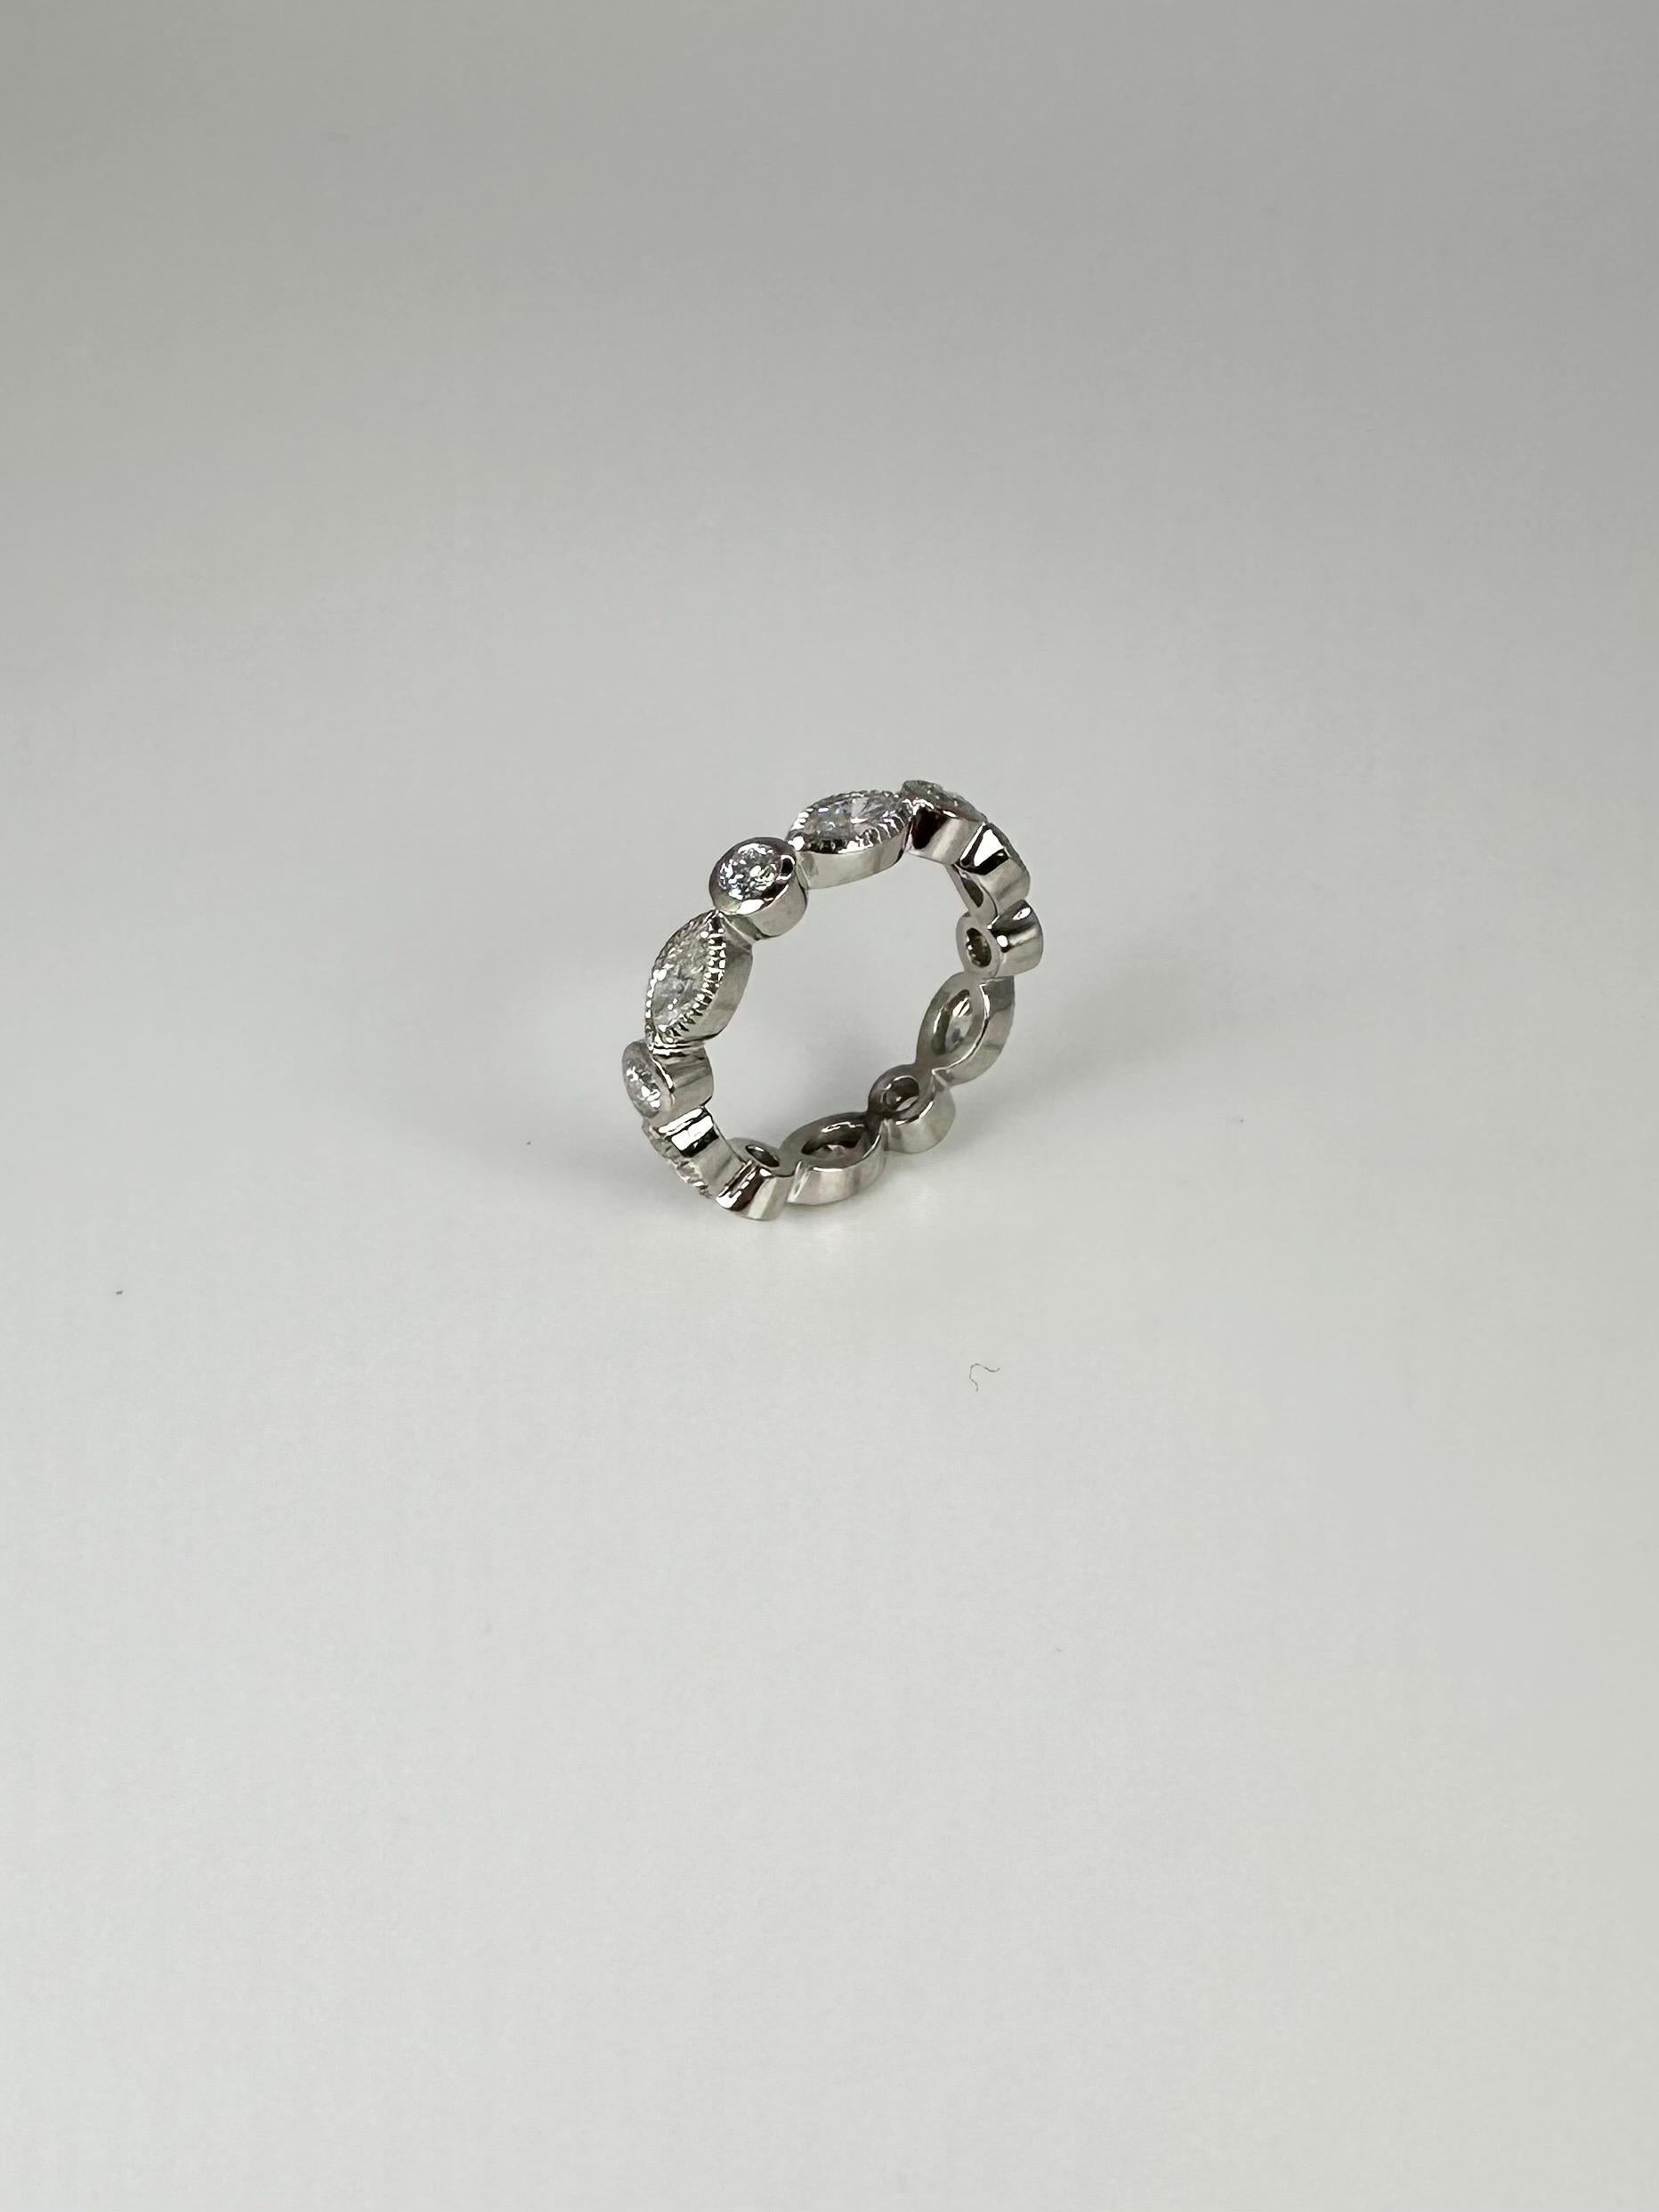 Marquise Diamond Eternity Ring Platinum Diamond Ring 1.7ct of Diamonds Large For Sale 1